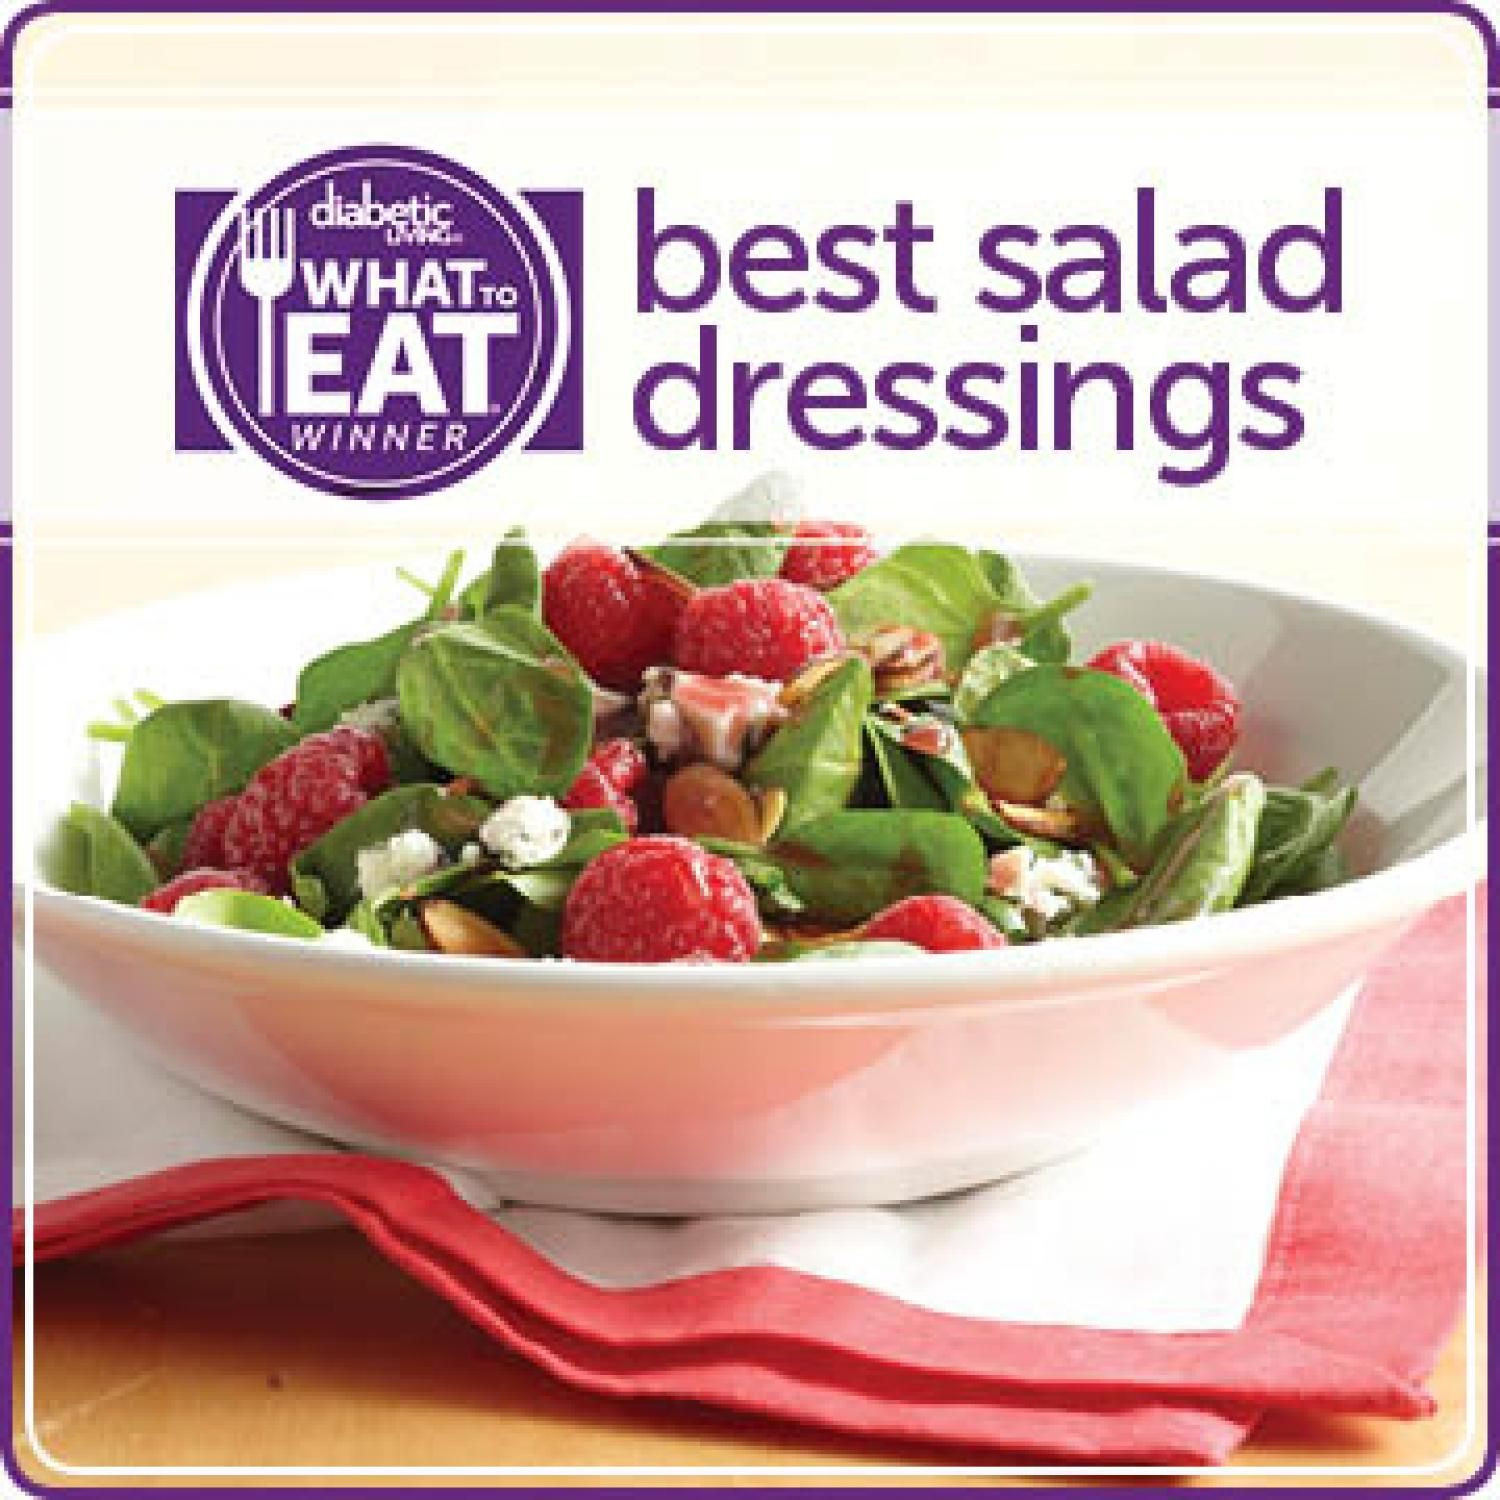 Best Salad Dressings For Diets
 Best Salad Dressing Brands for Diabetes